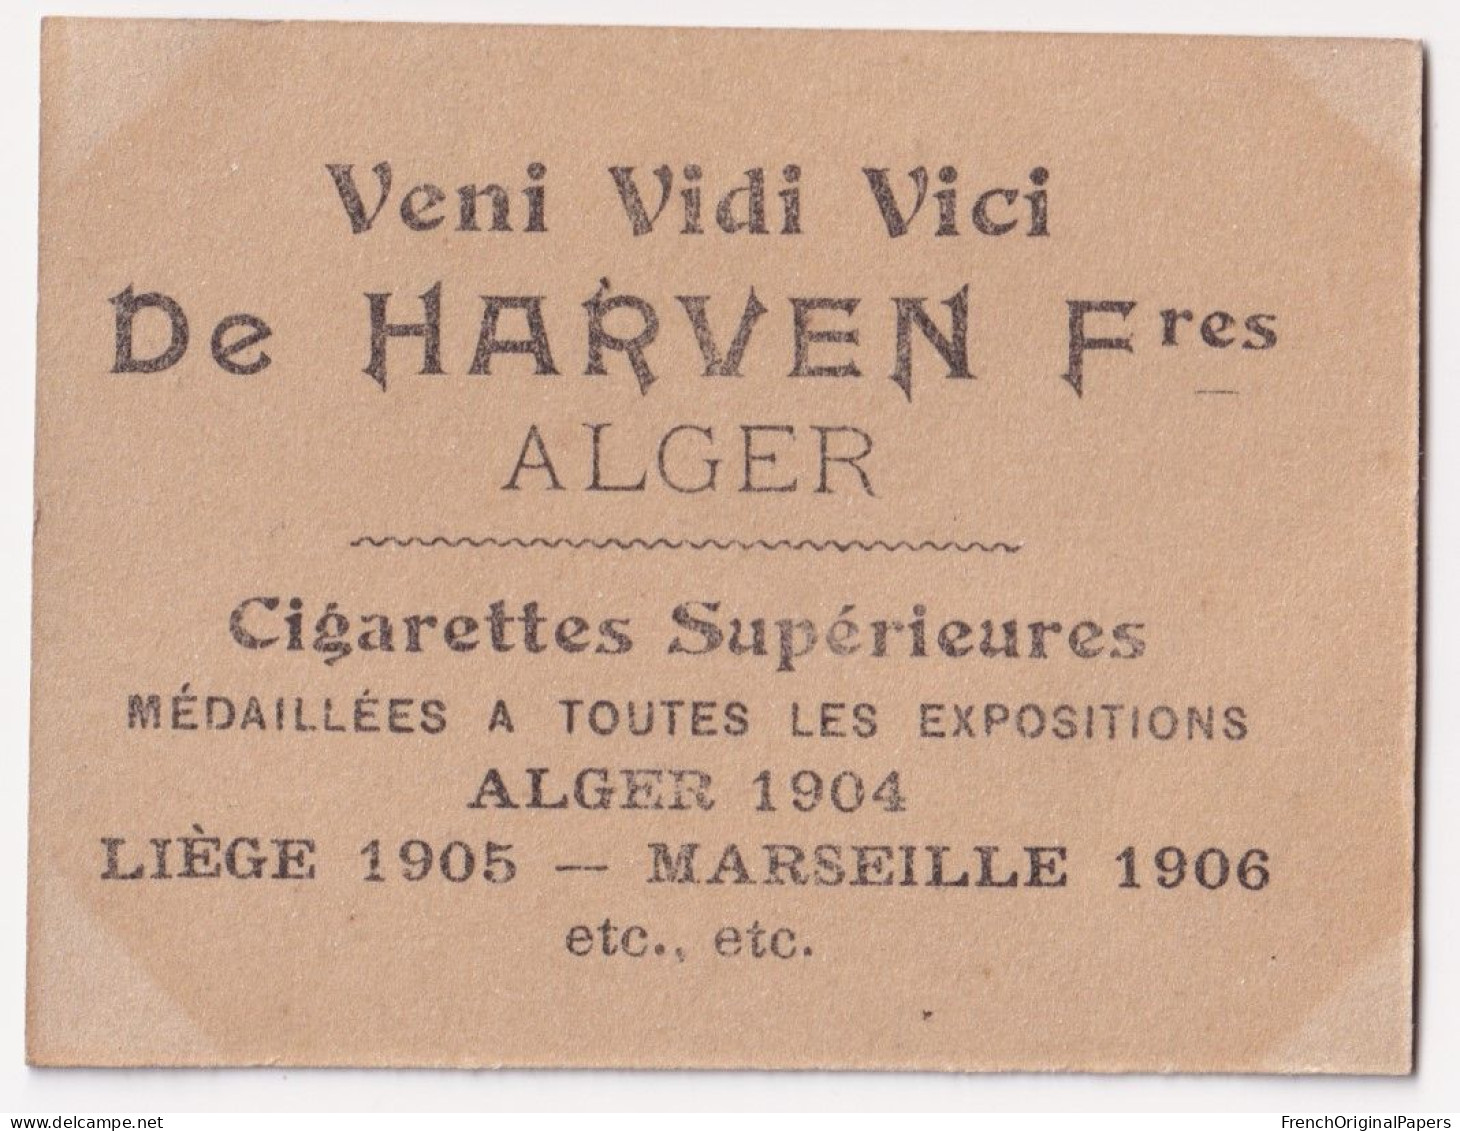 Mireille - Cigarettes De Harven 1910 Photo Femme Sexy Lady Pin-up Woman Nue Nude Nu Seins Nus Vintage Alger A62-9 - Other Brands